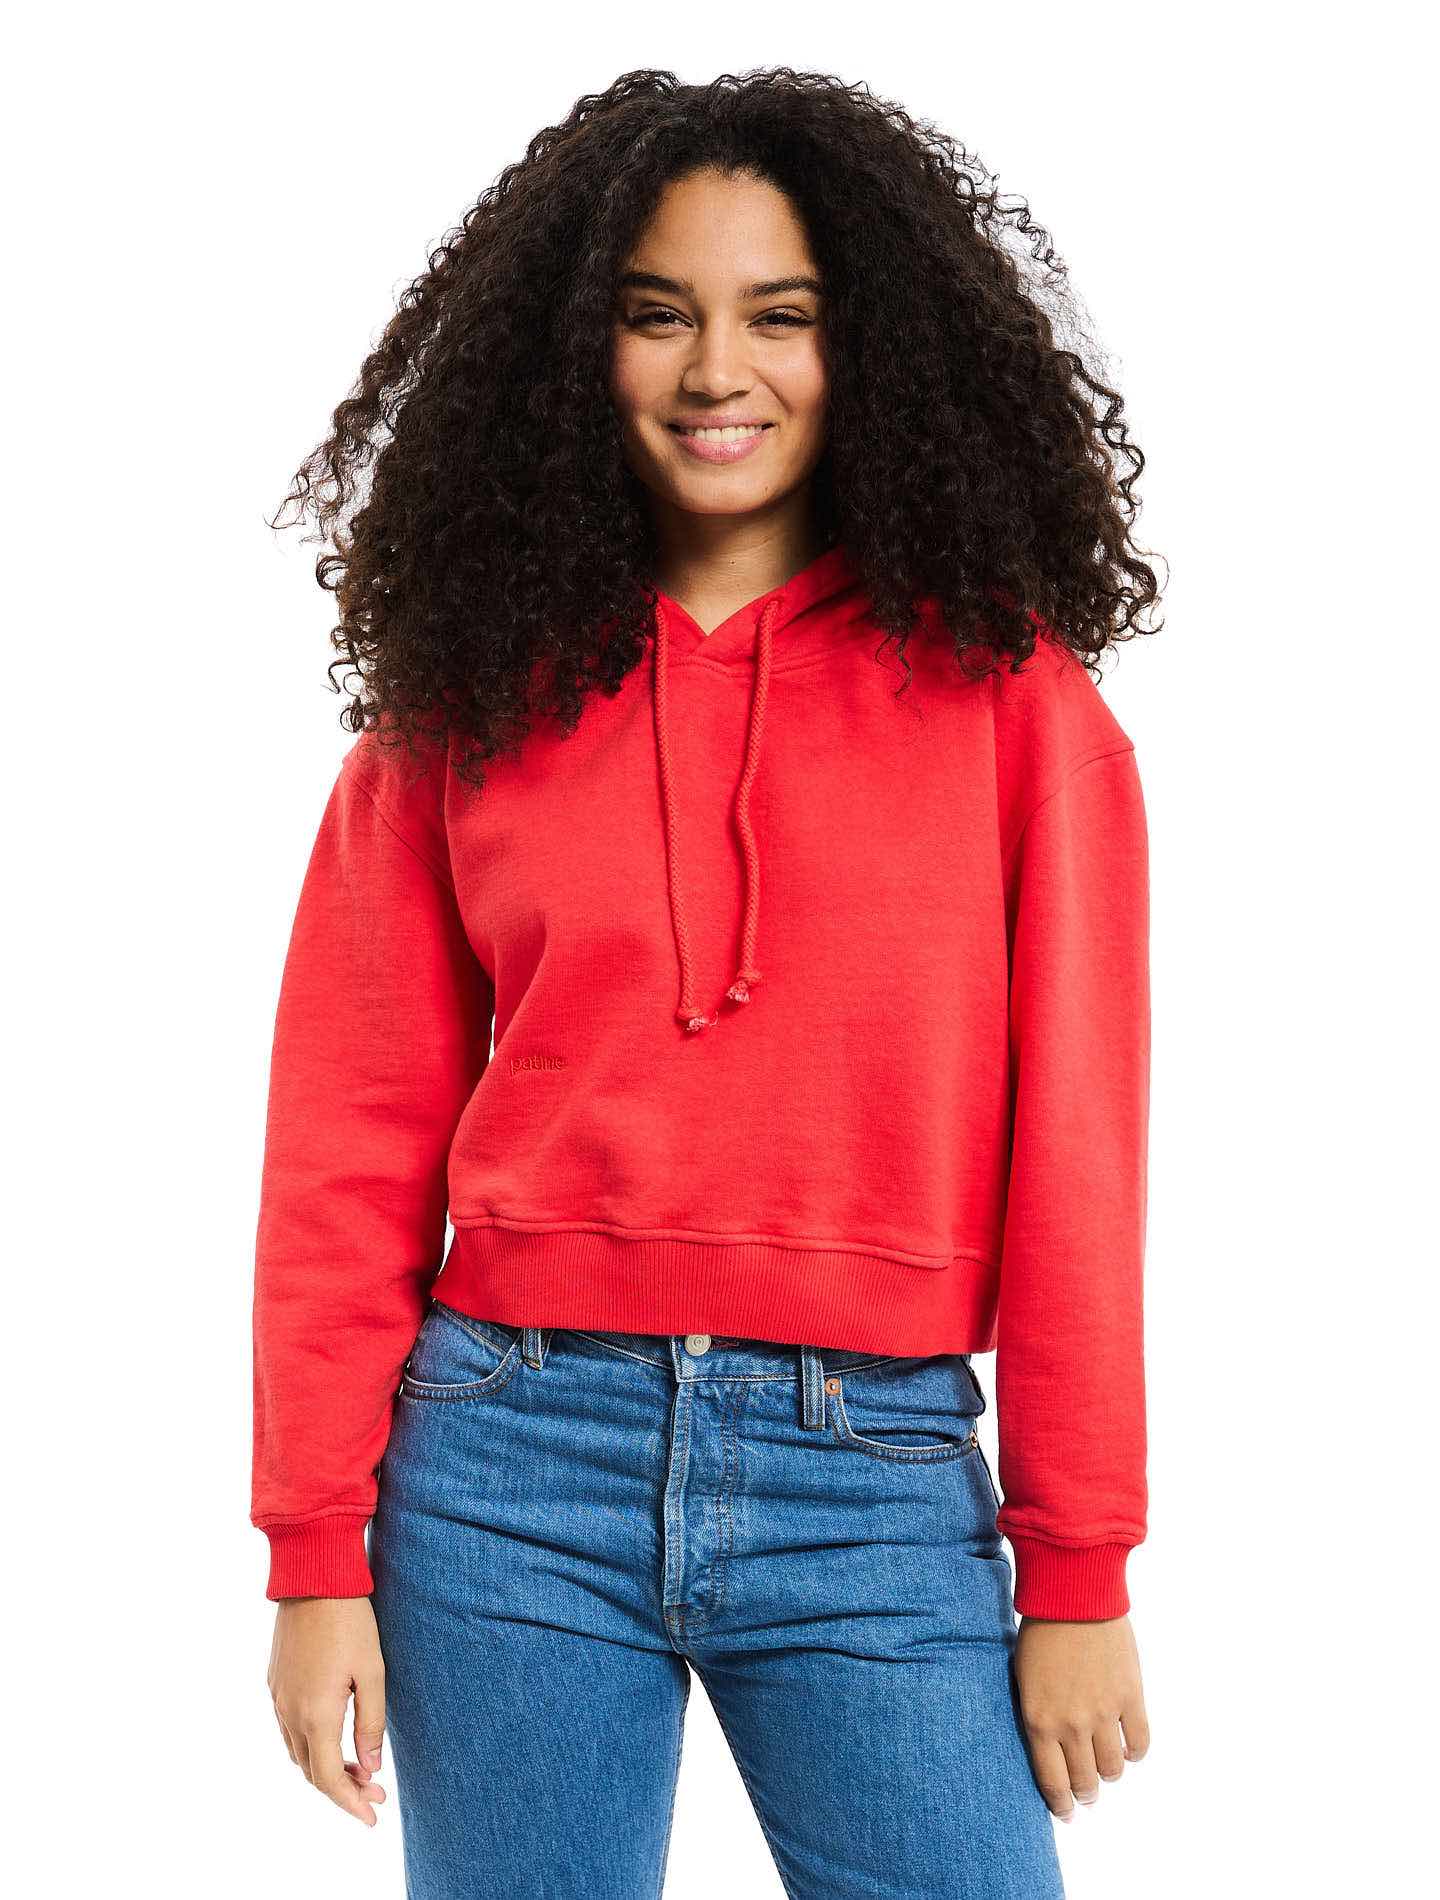 Le sweatshirt Hoodie Boxy Marty® molleton bio-recyclé Rouge tomato